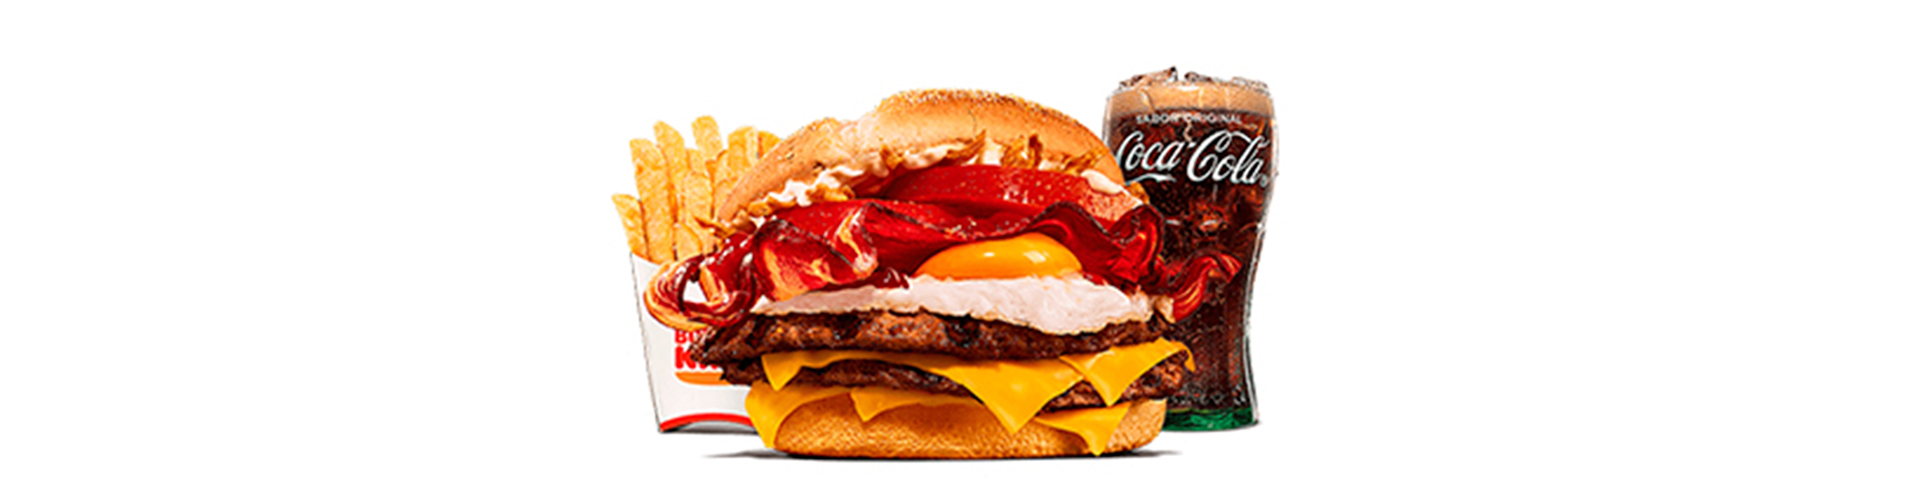 burgerking-40002126-nestea-ensalada